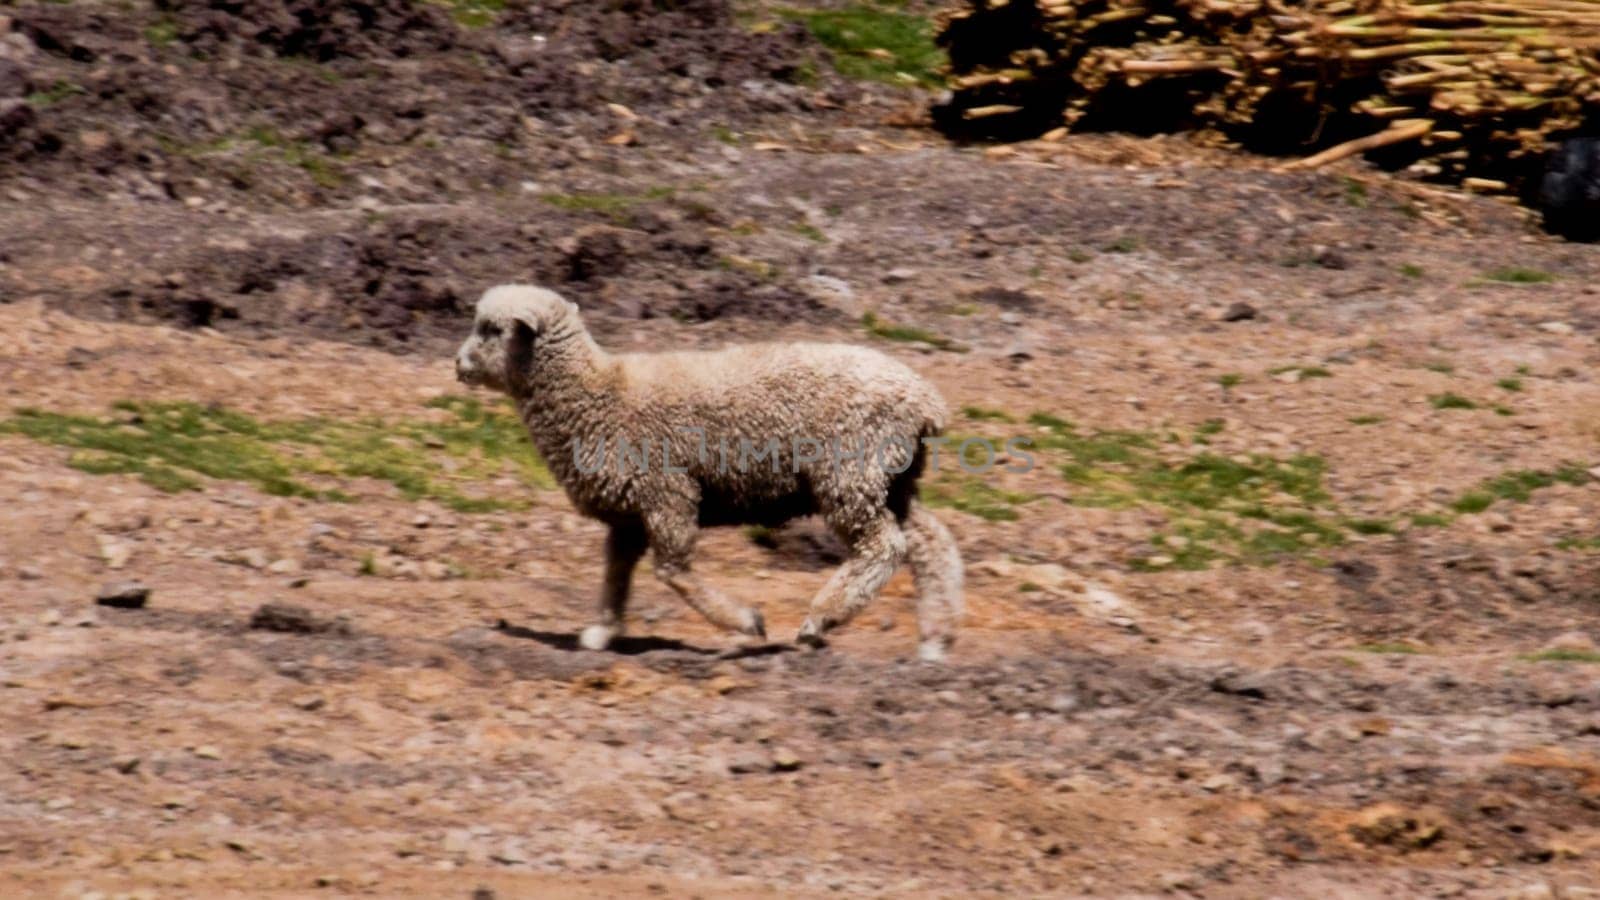 Lone sheep grazing in arid landscape by Peruphotoart